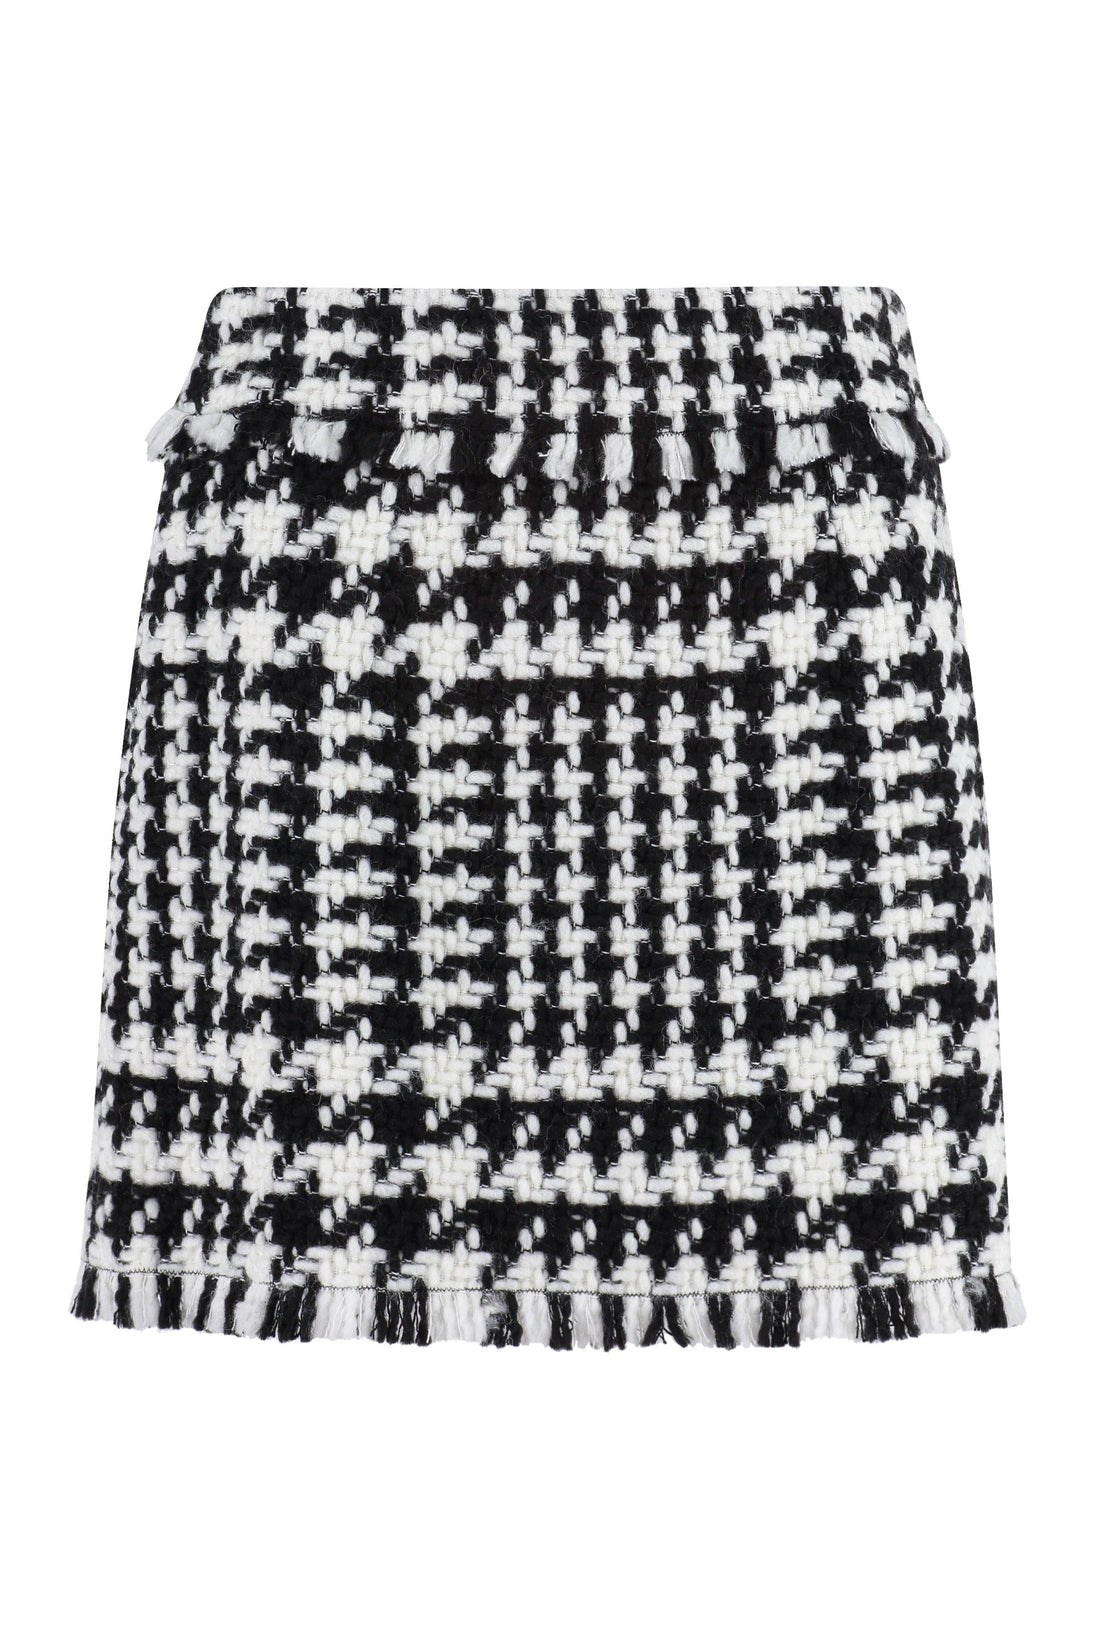 Dolce & Gabbana-OUTLET-SALE-Houndstooth mini skirt-ARCHIVIST